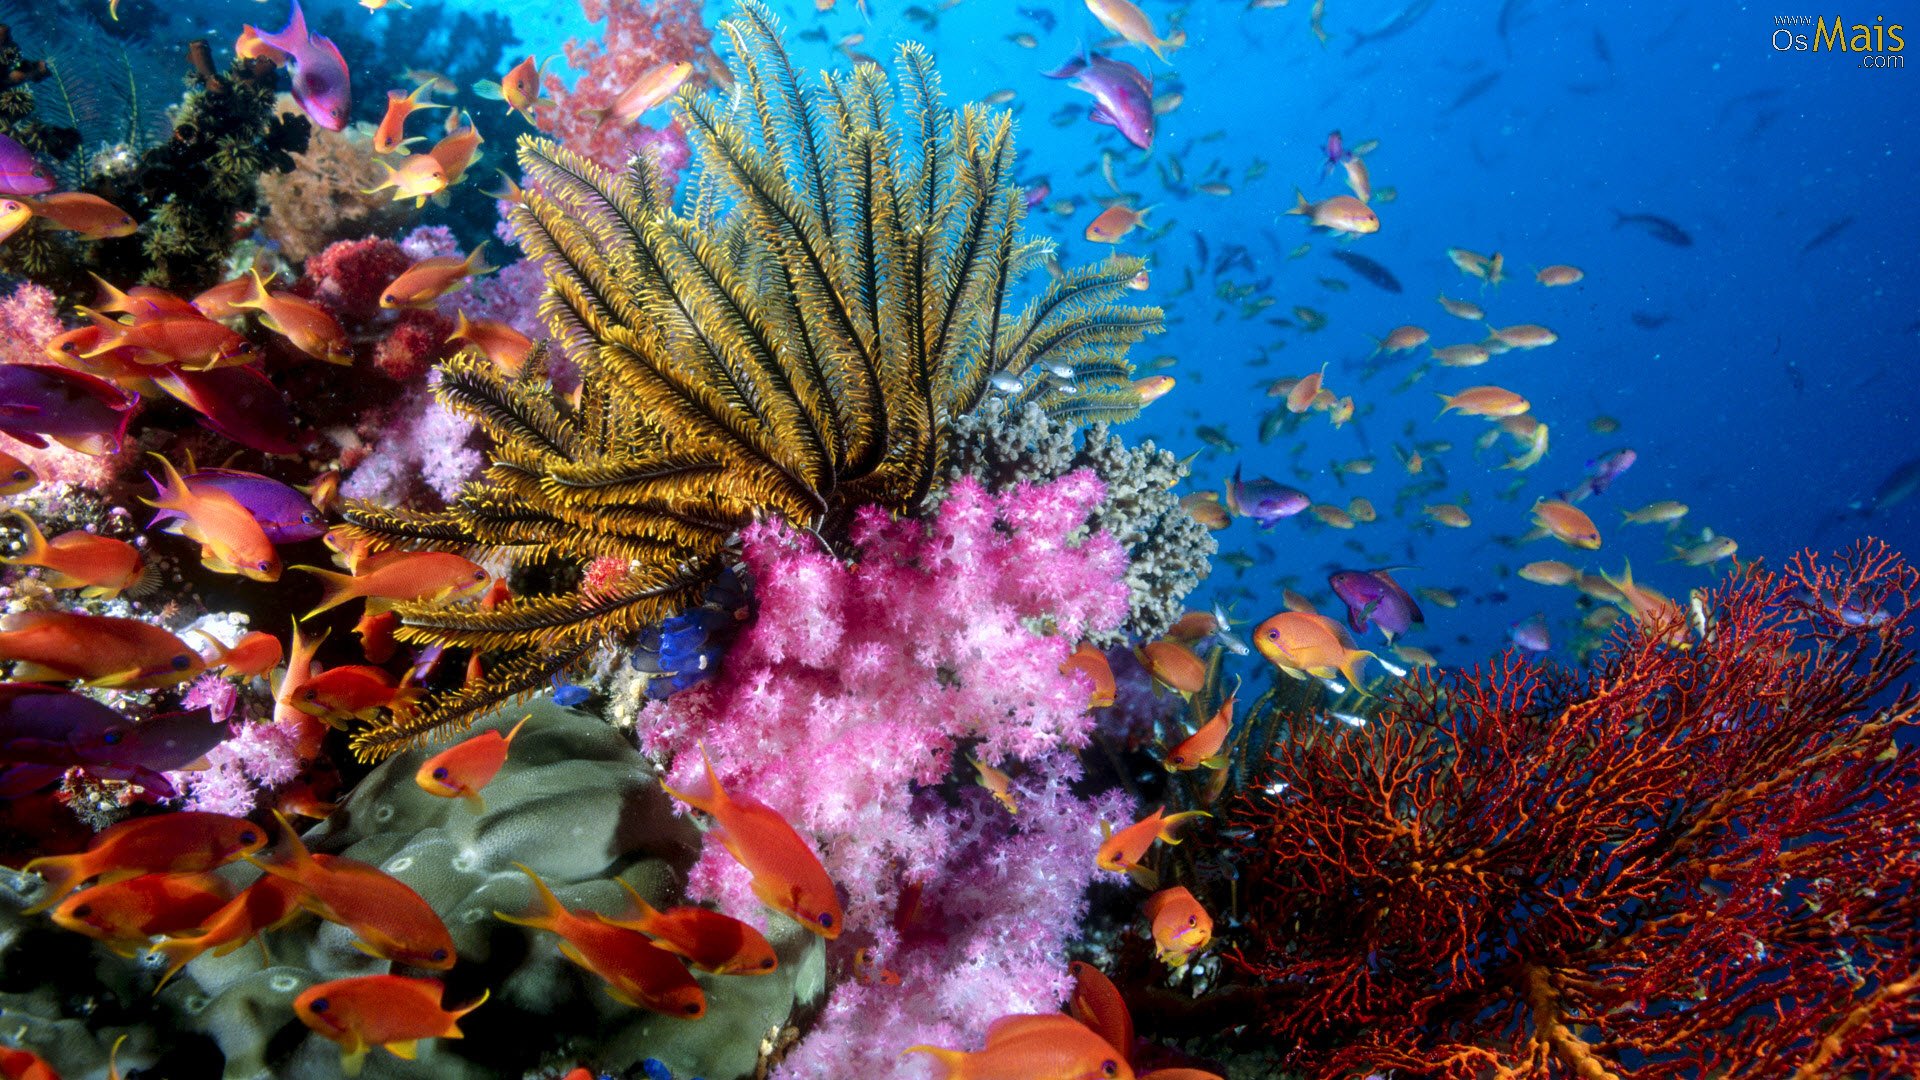 tapete fundo do mar,riff,korallenriff,unter wasser,meeresbiologie,korallenrifffische